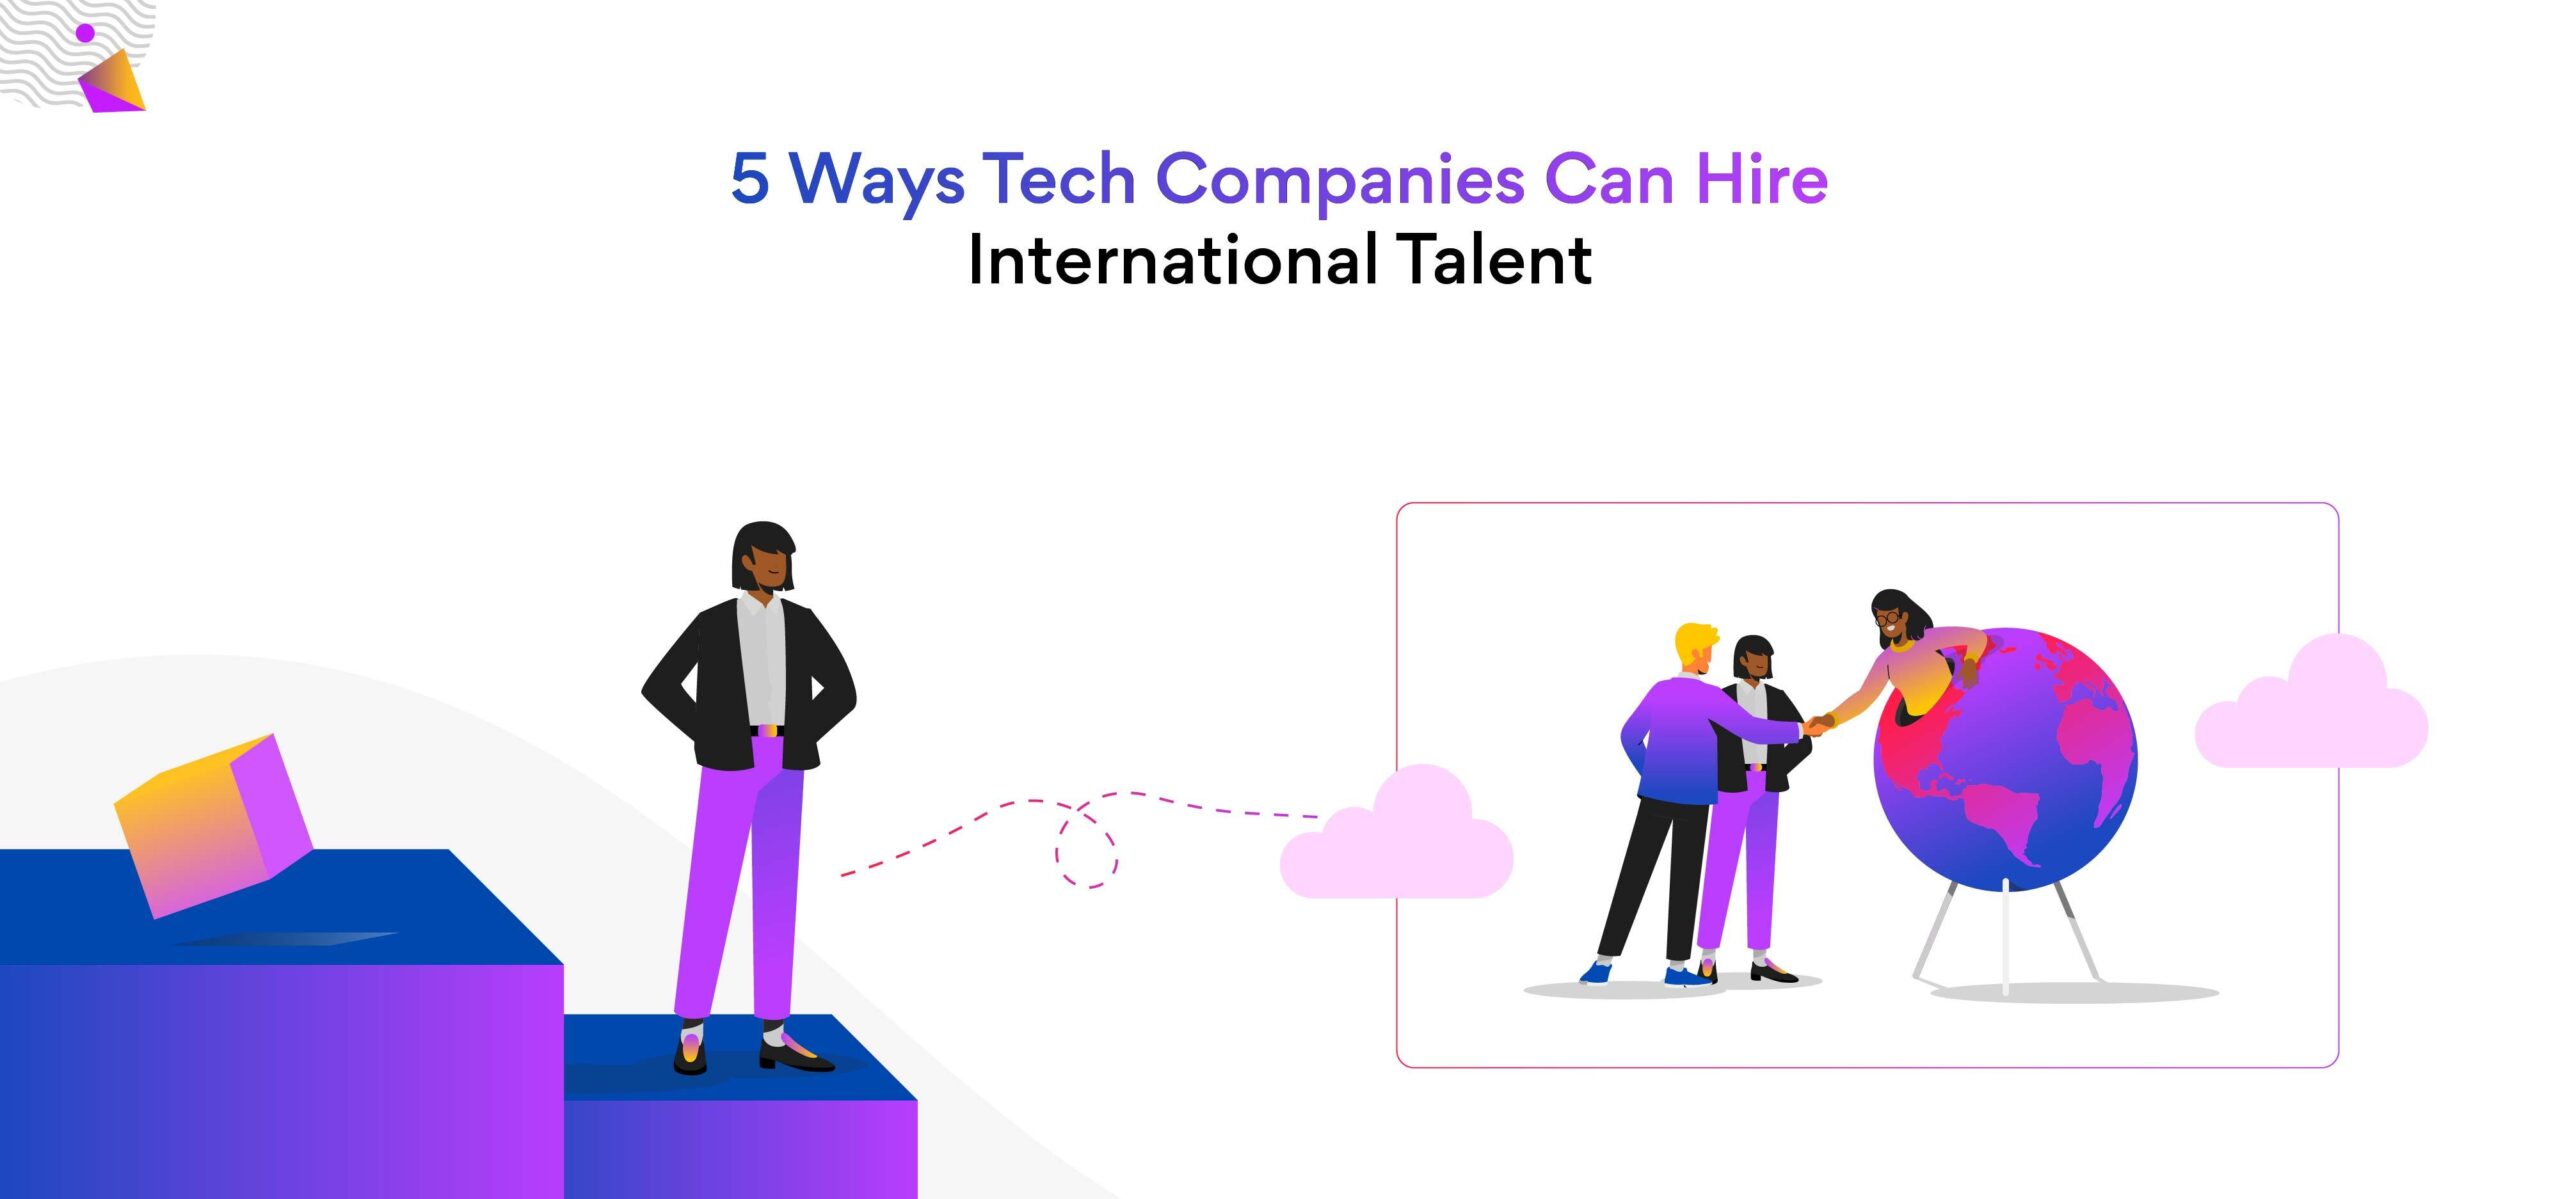 5 Ways Tech Companies Can Hire the Best International Talent